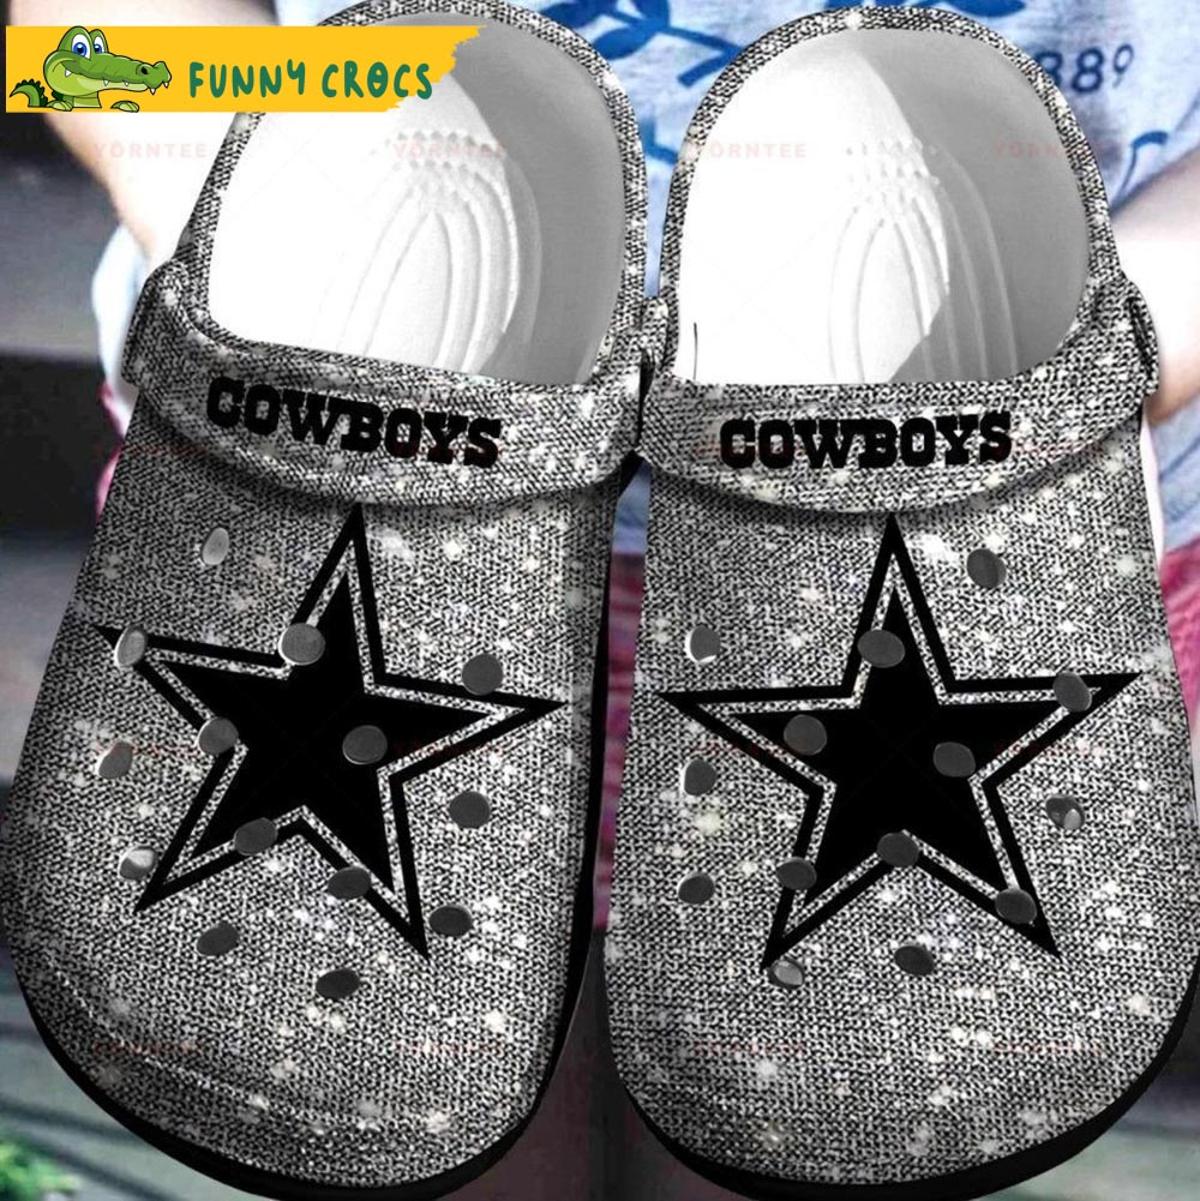 Blue Borders Dallas Cowboys Crocs Shoes